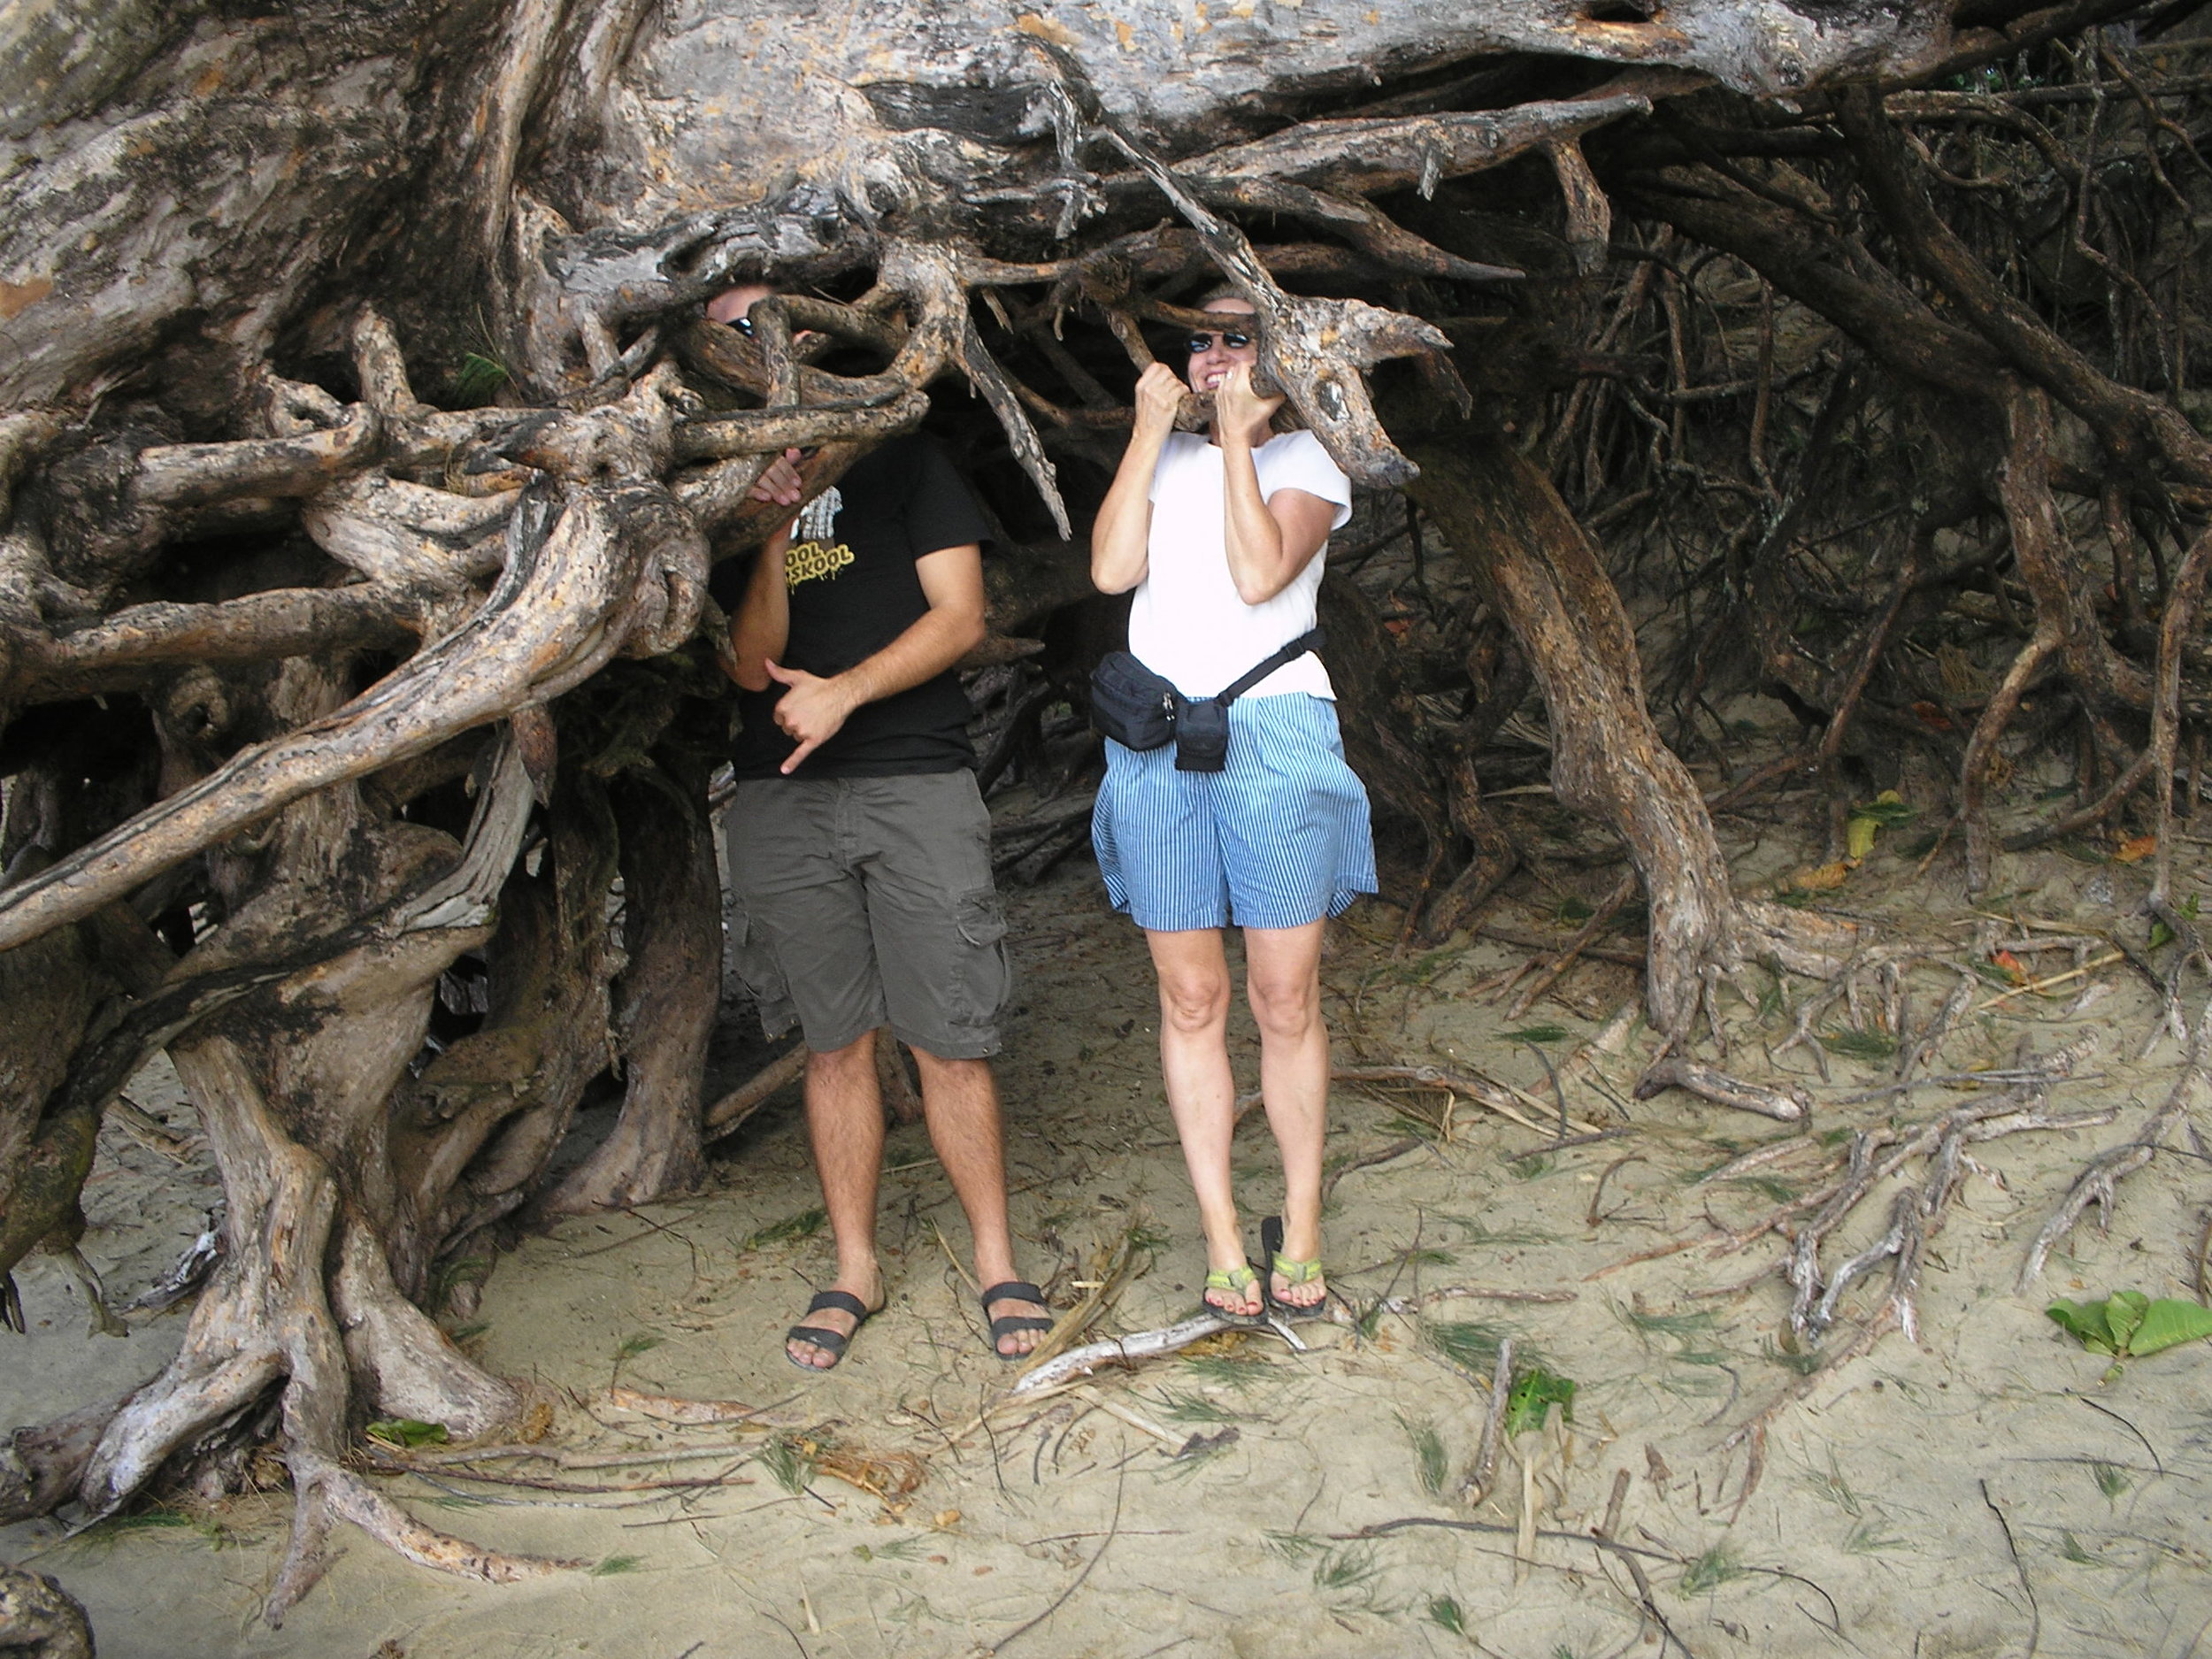 hiding in tree roots kee beach.jpg